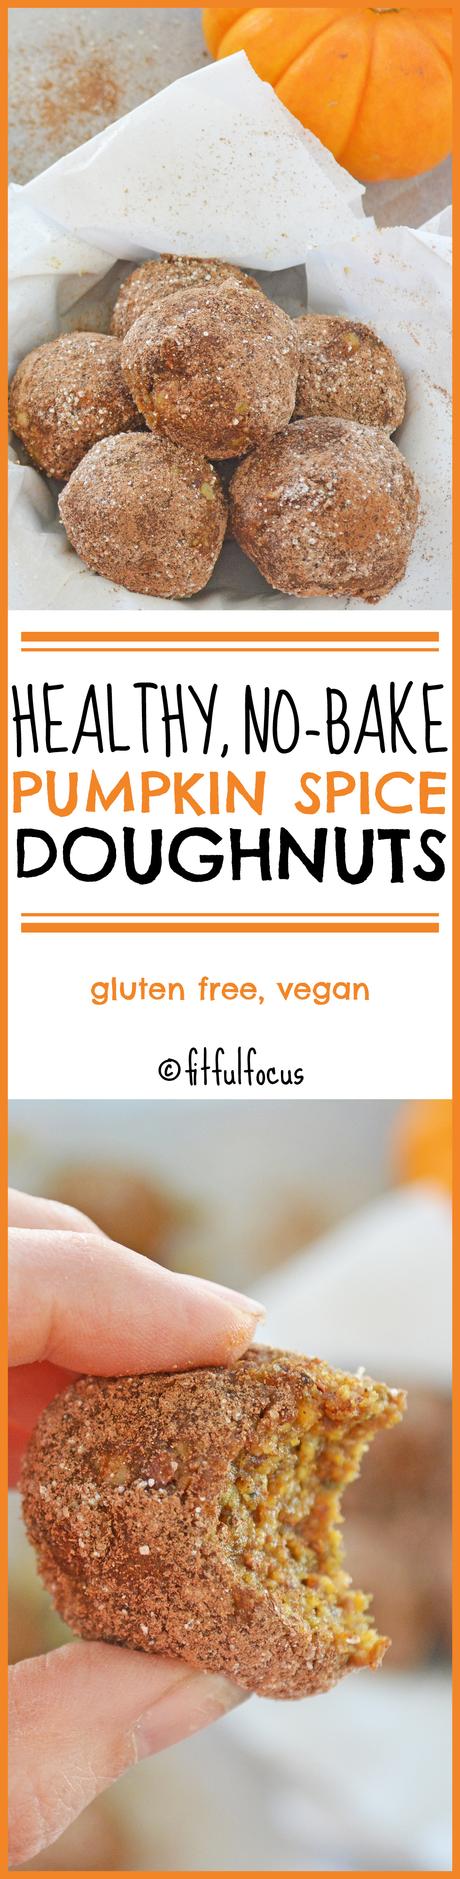 Healthy, No-Bake Pumpkin Spice Doughnuts (gluten free, vegan)